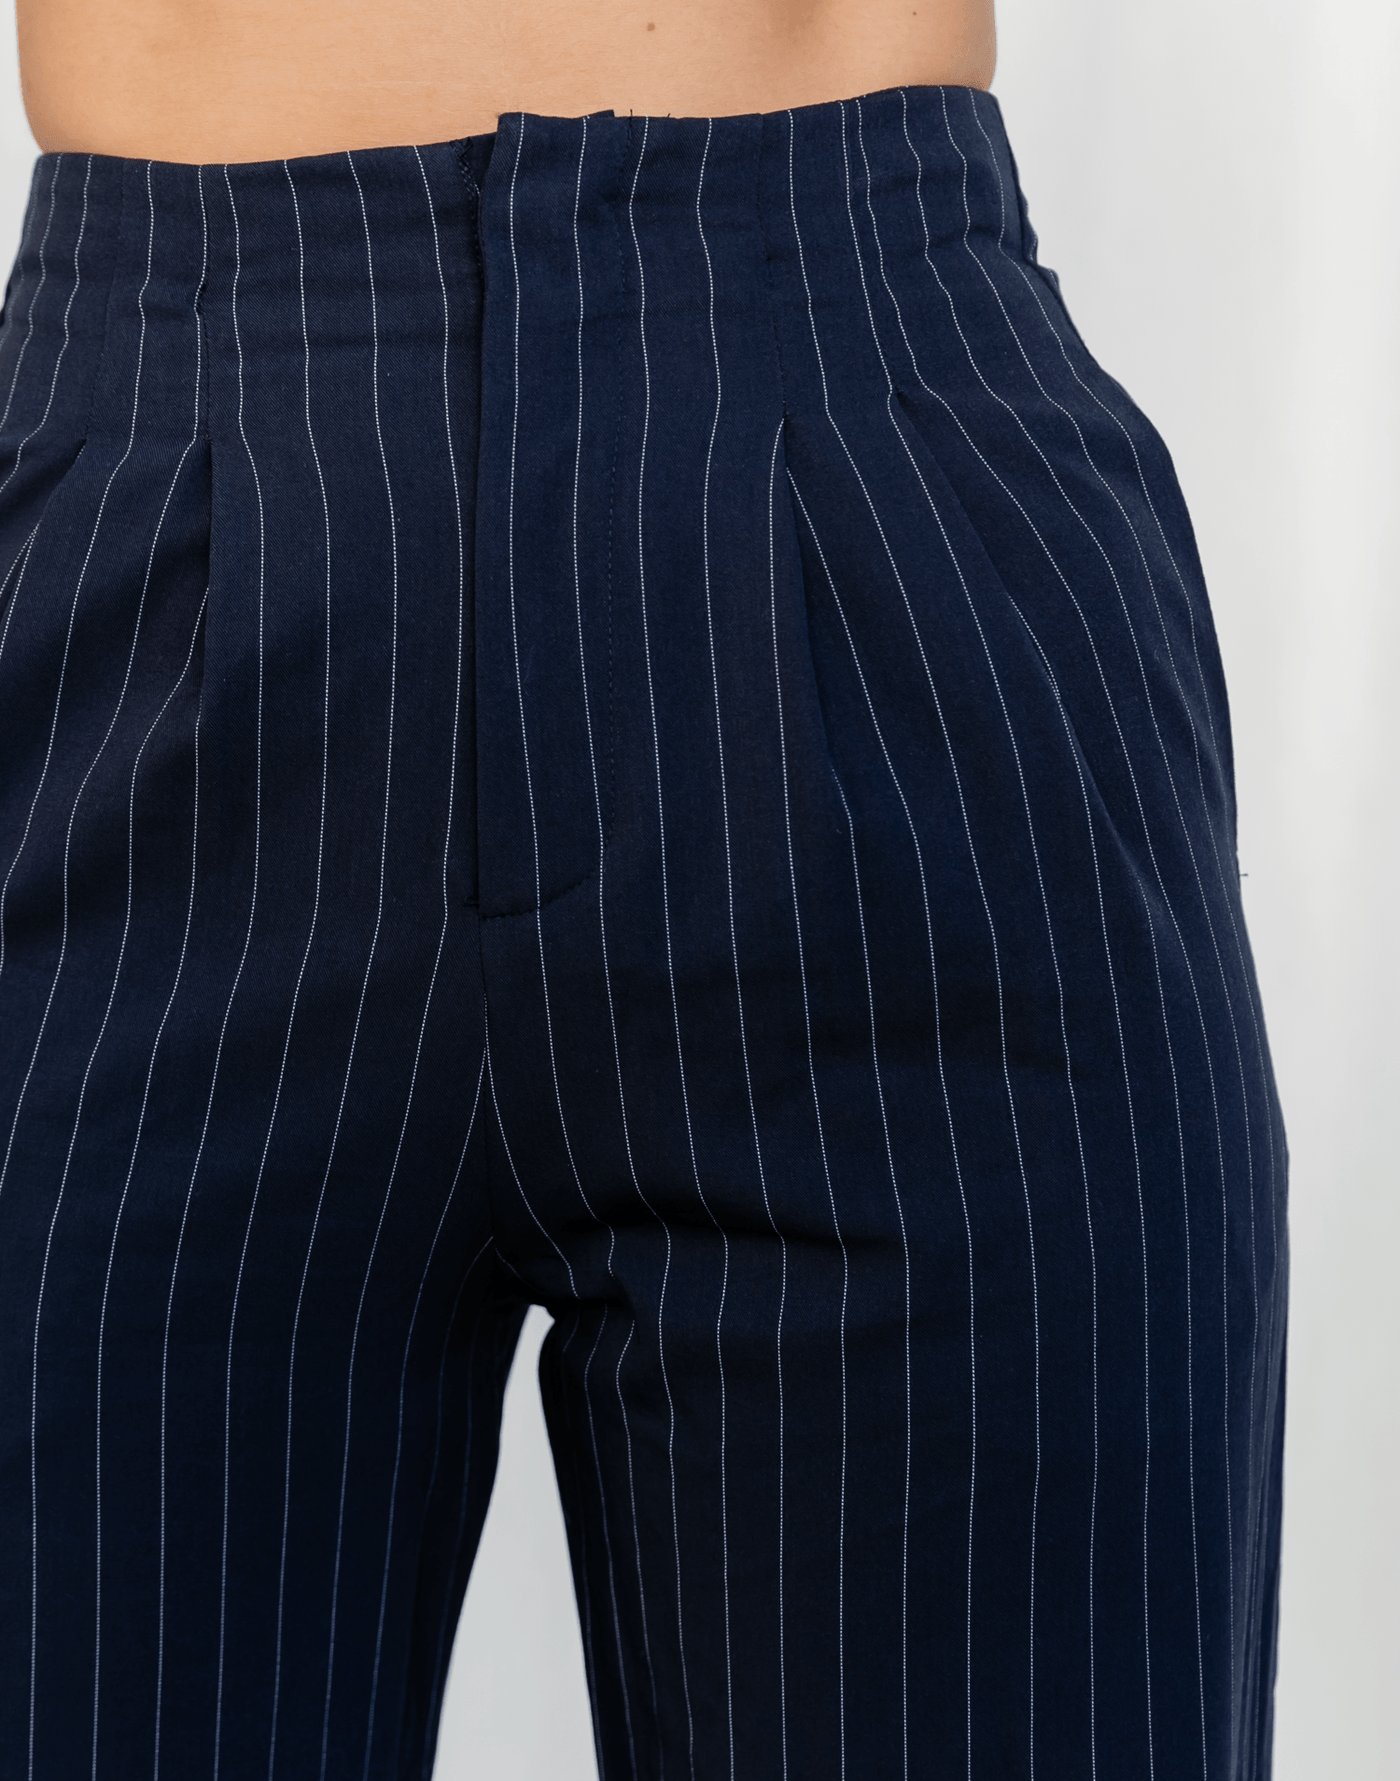 New Girl Pants (Navy Pinstripe) - Navy Blue Pinstripe High Waisted Pants - Women's Pants - Charcoal Clothing